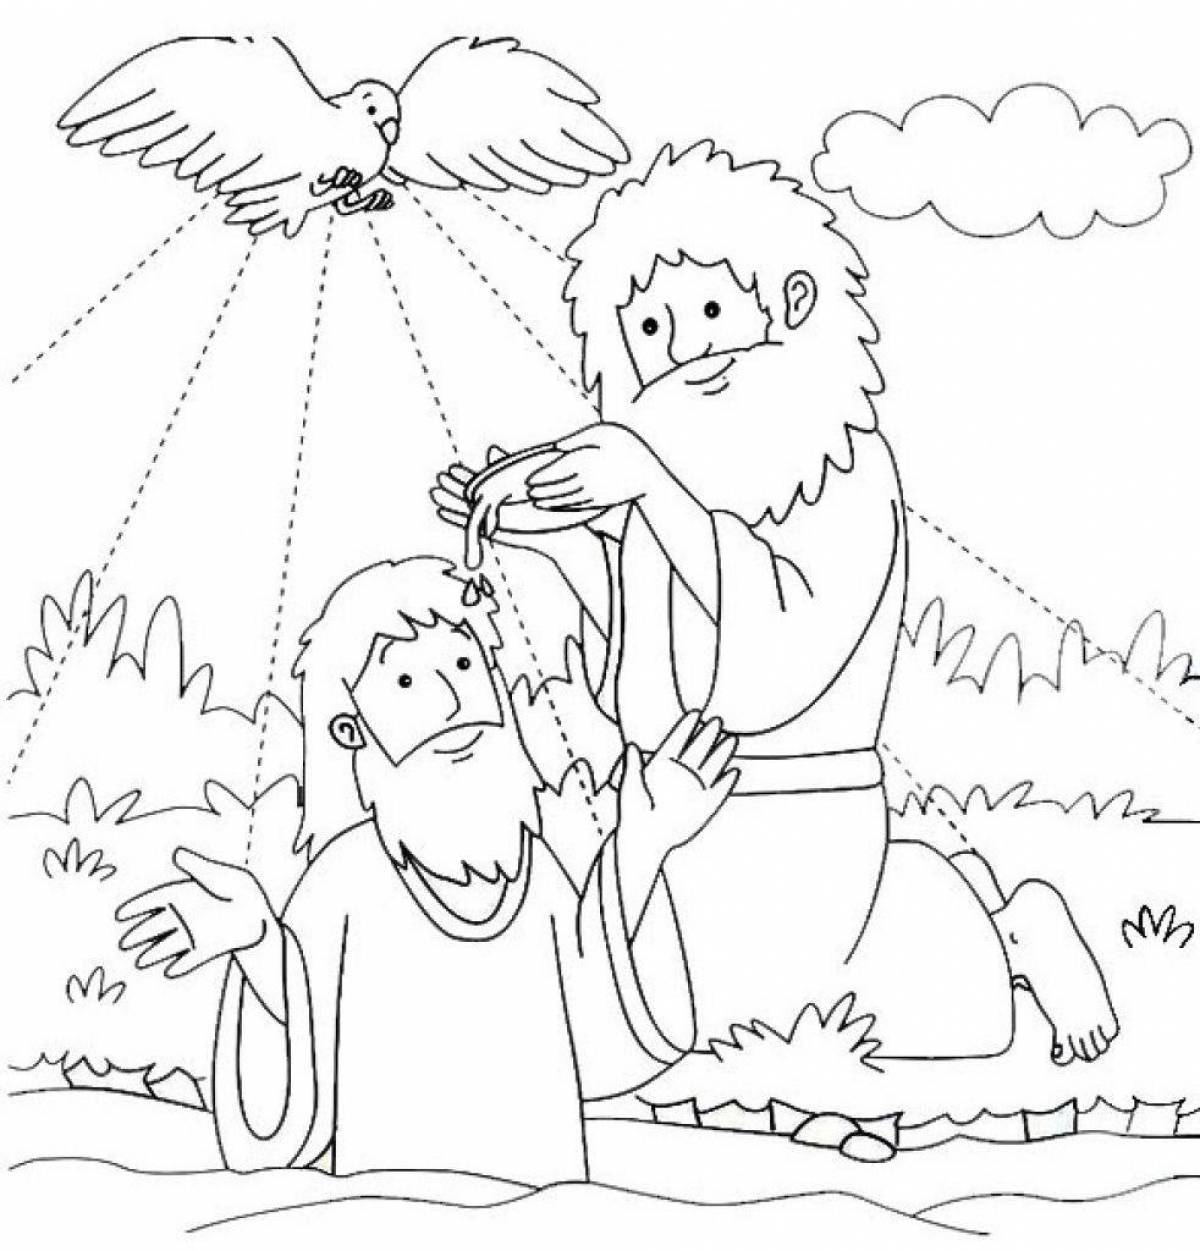 Exuberant baptism coloring book for kids